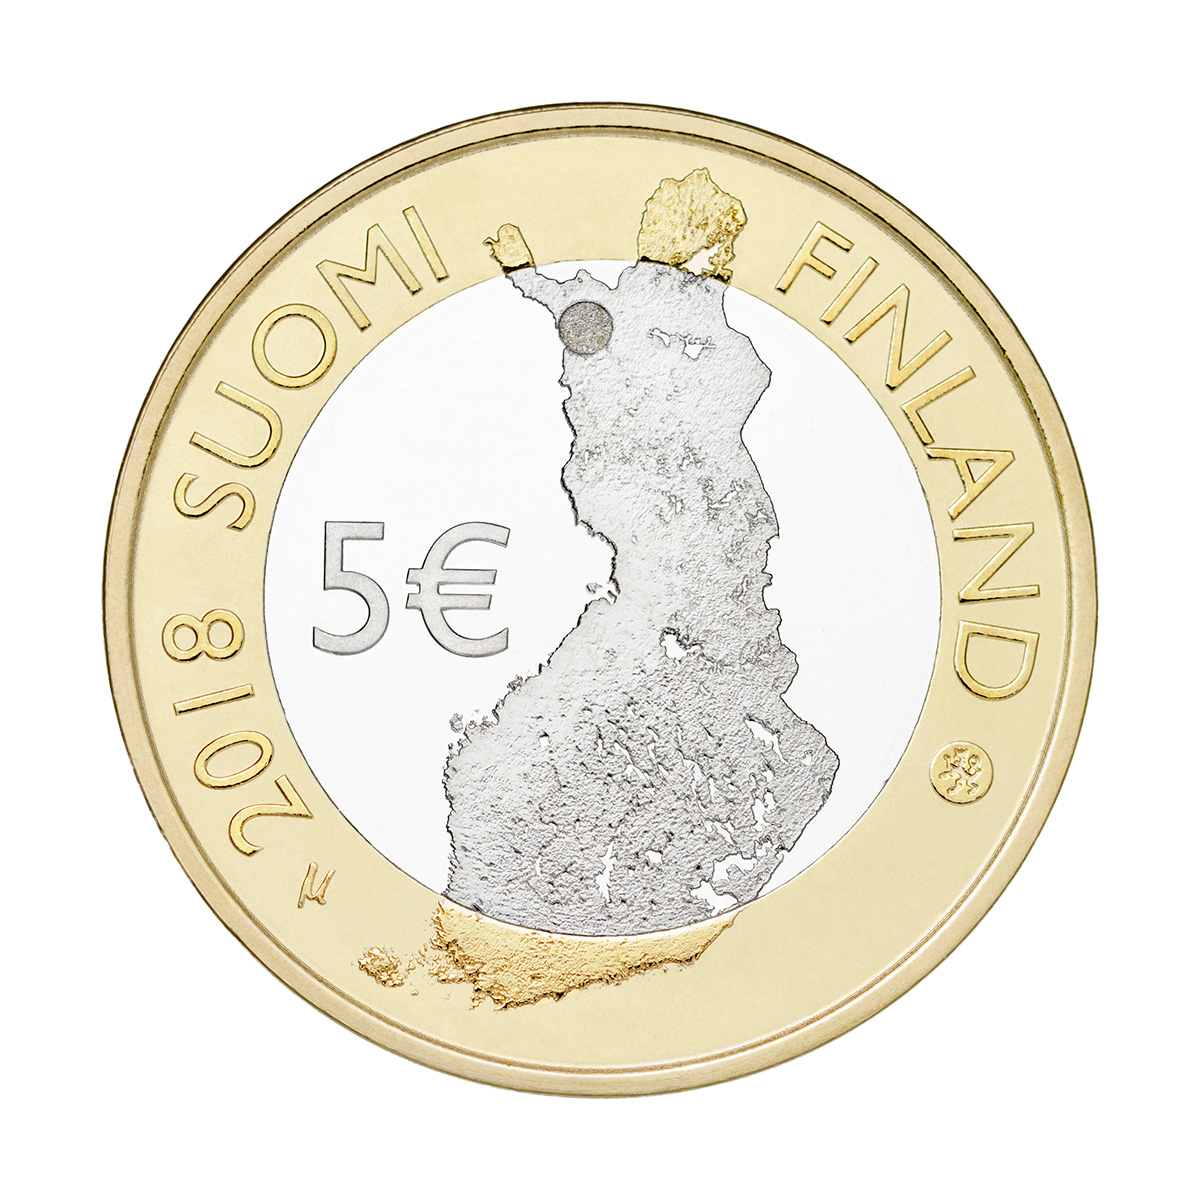 Финляндия: пейзажи Палластунтури на новых 5 евро